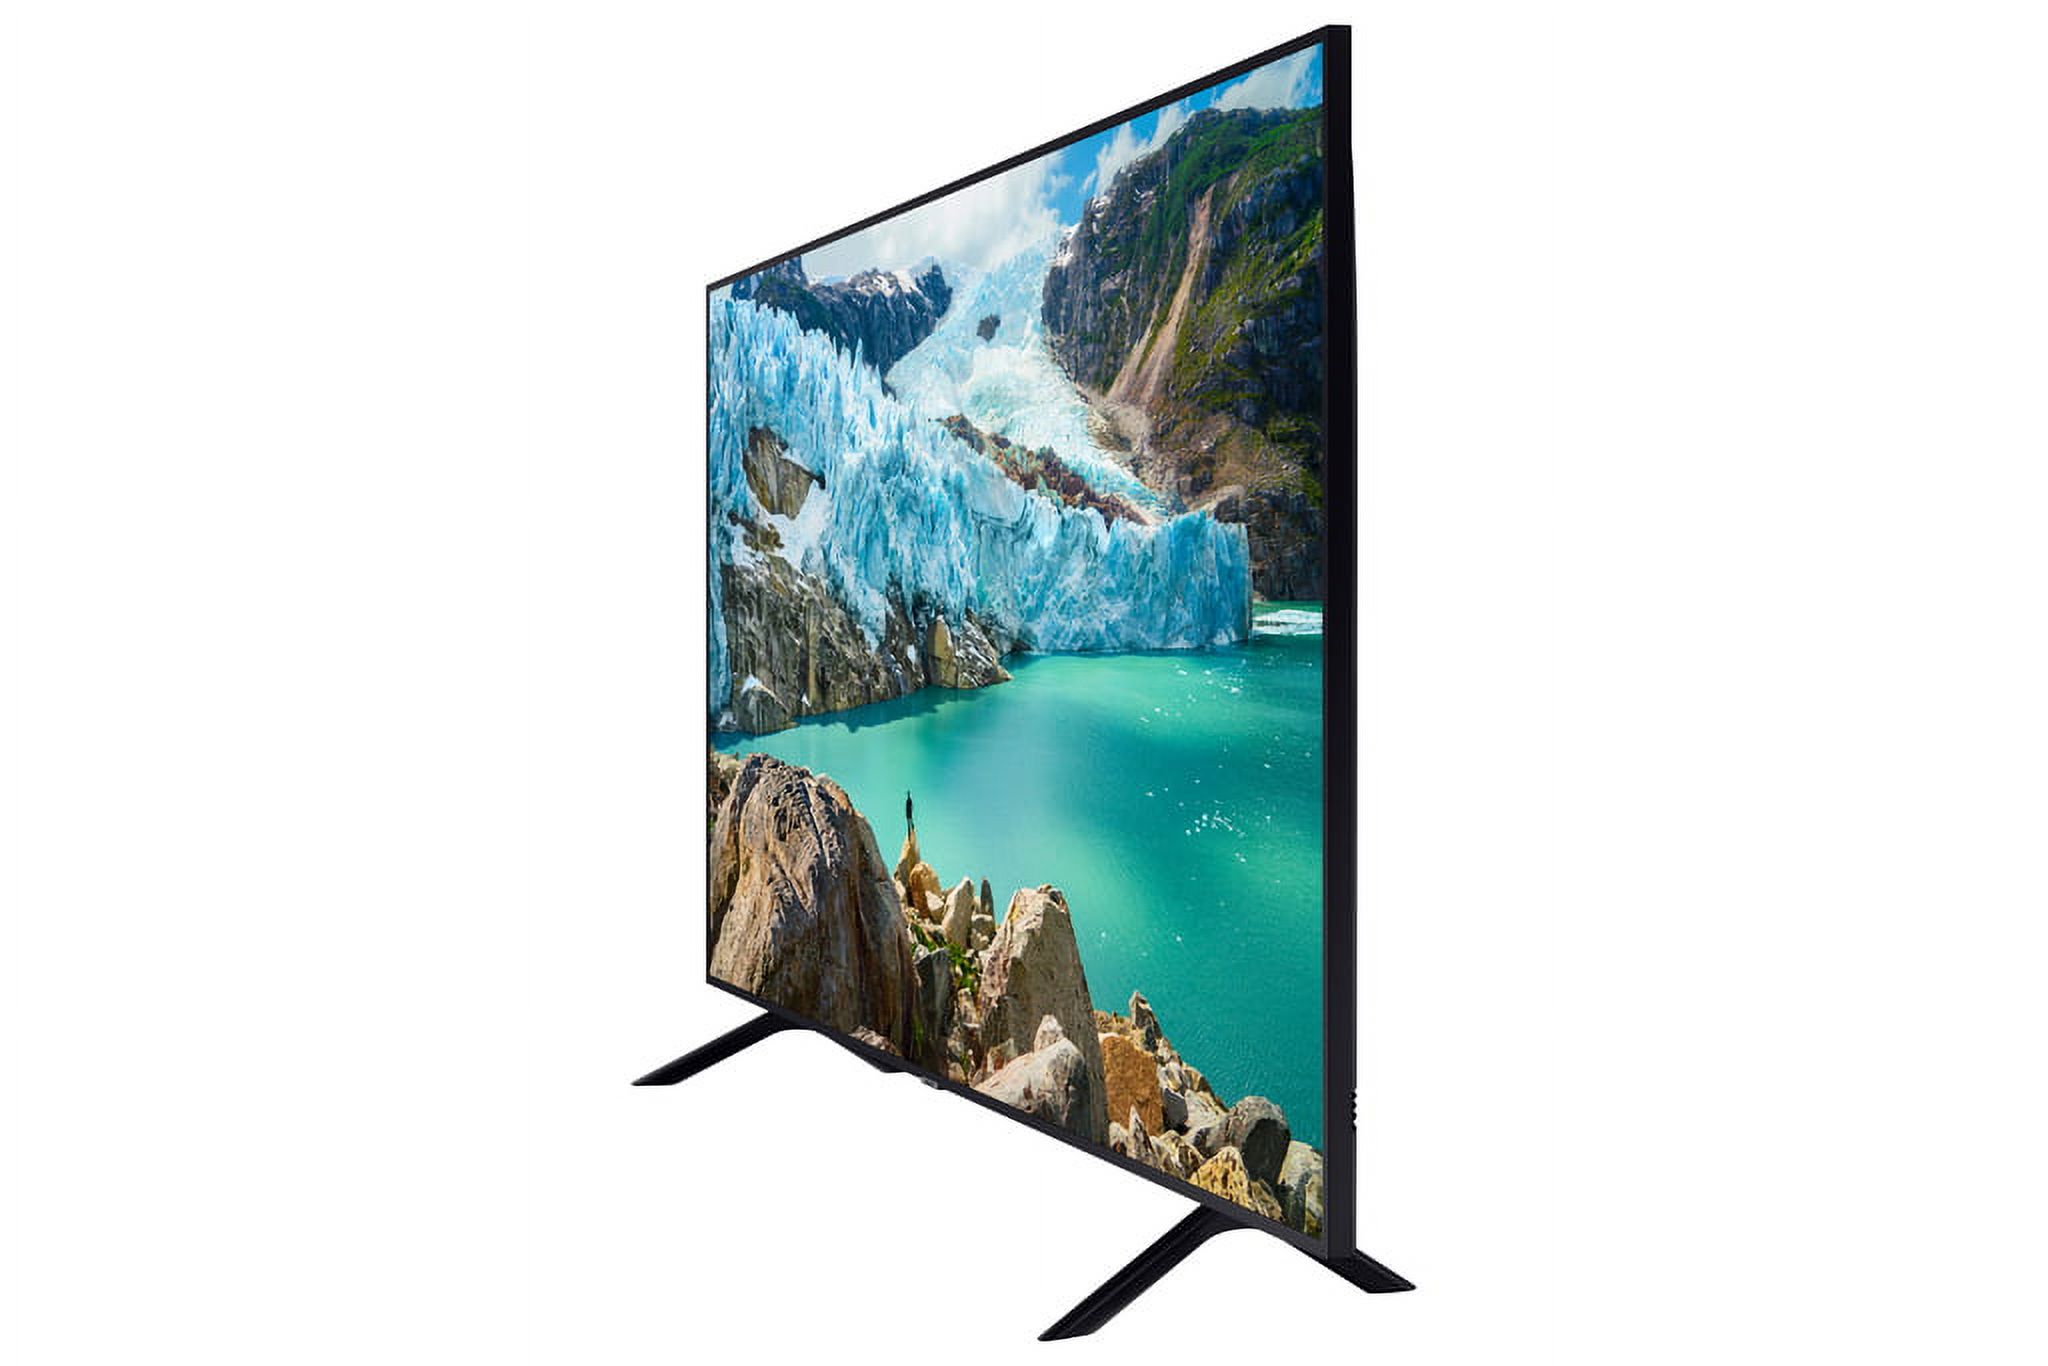 70 Samsung 4k Smart Tv, 6900 Series - image 4 of 7